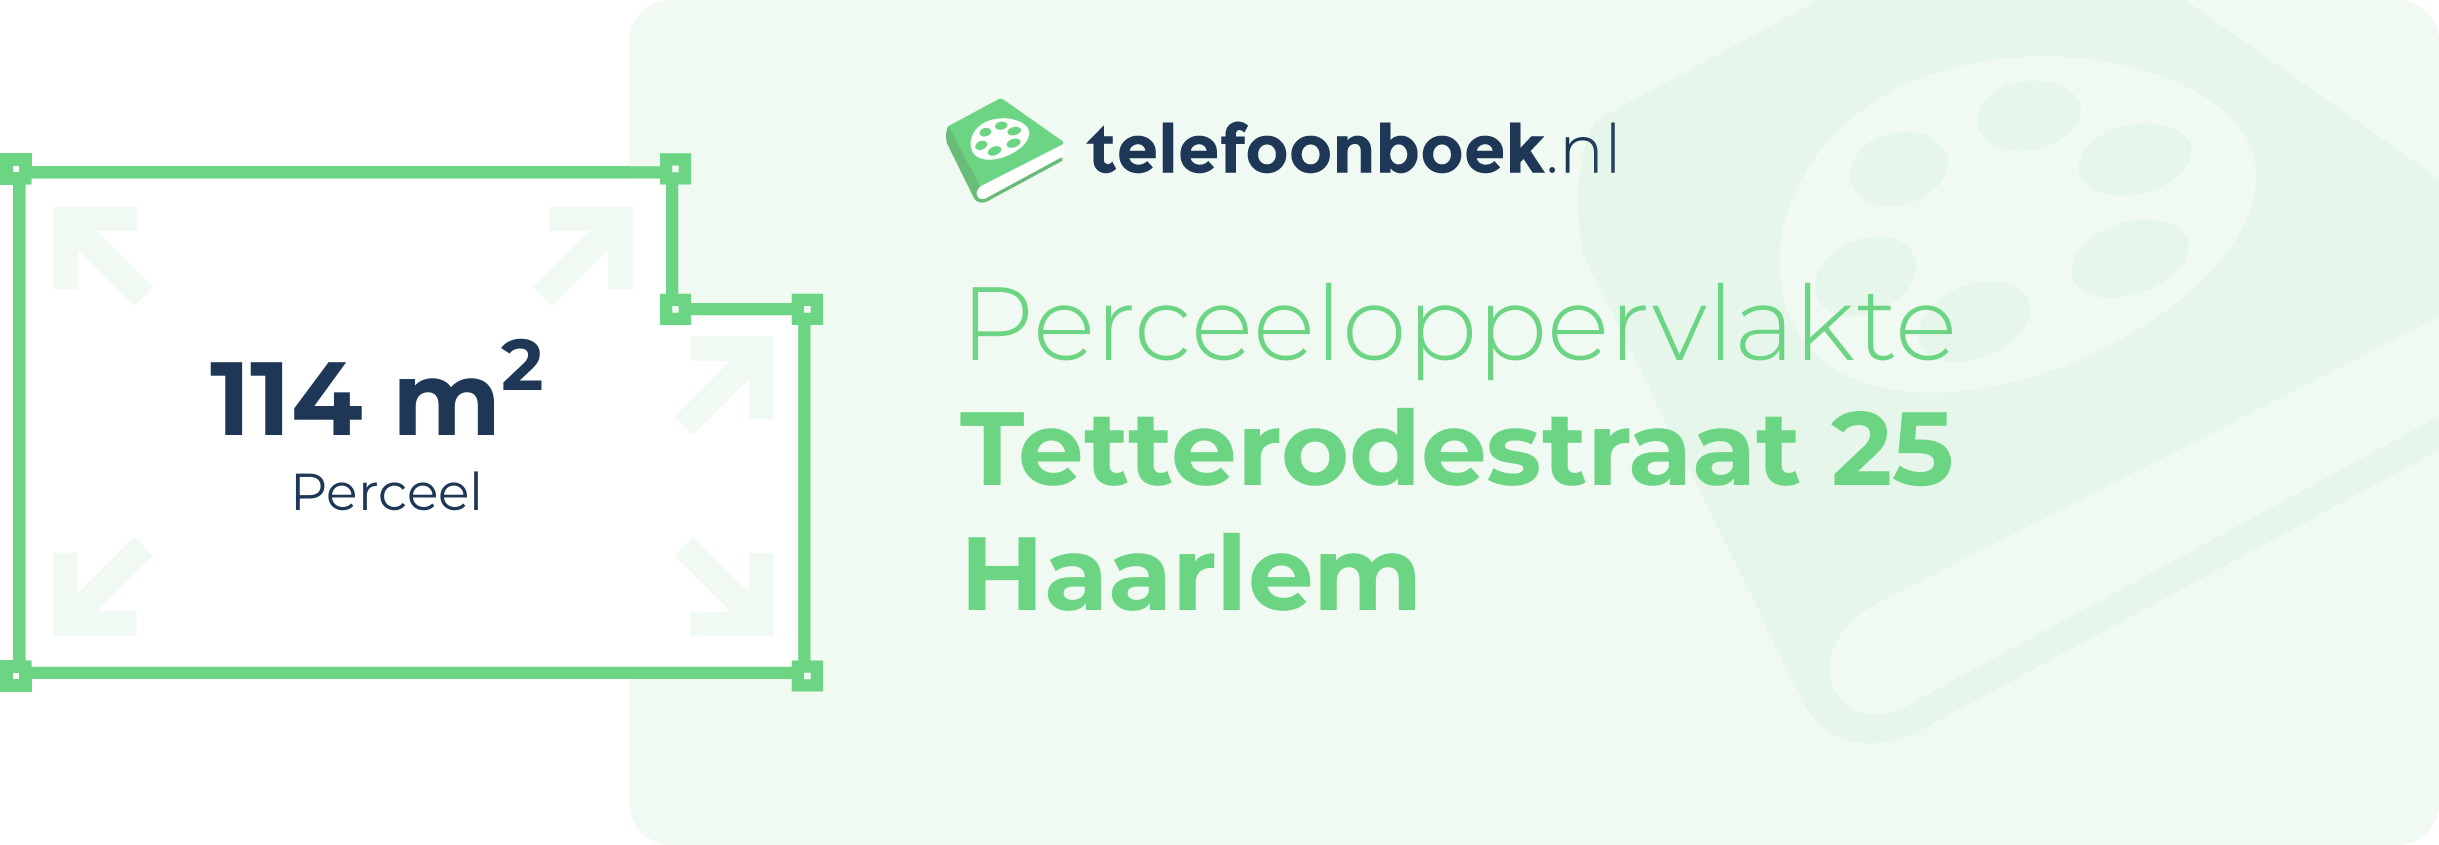 Perceeloppervlakte Tetterodestraat 25 Haarlem